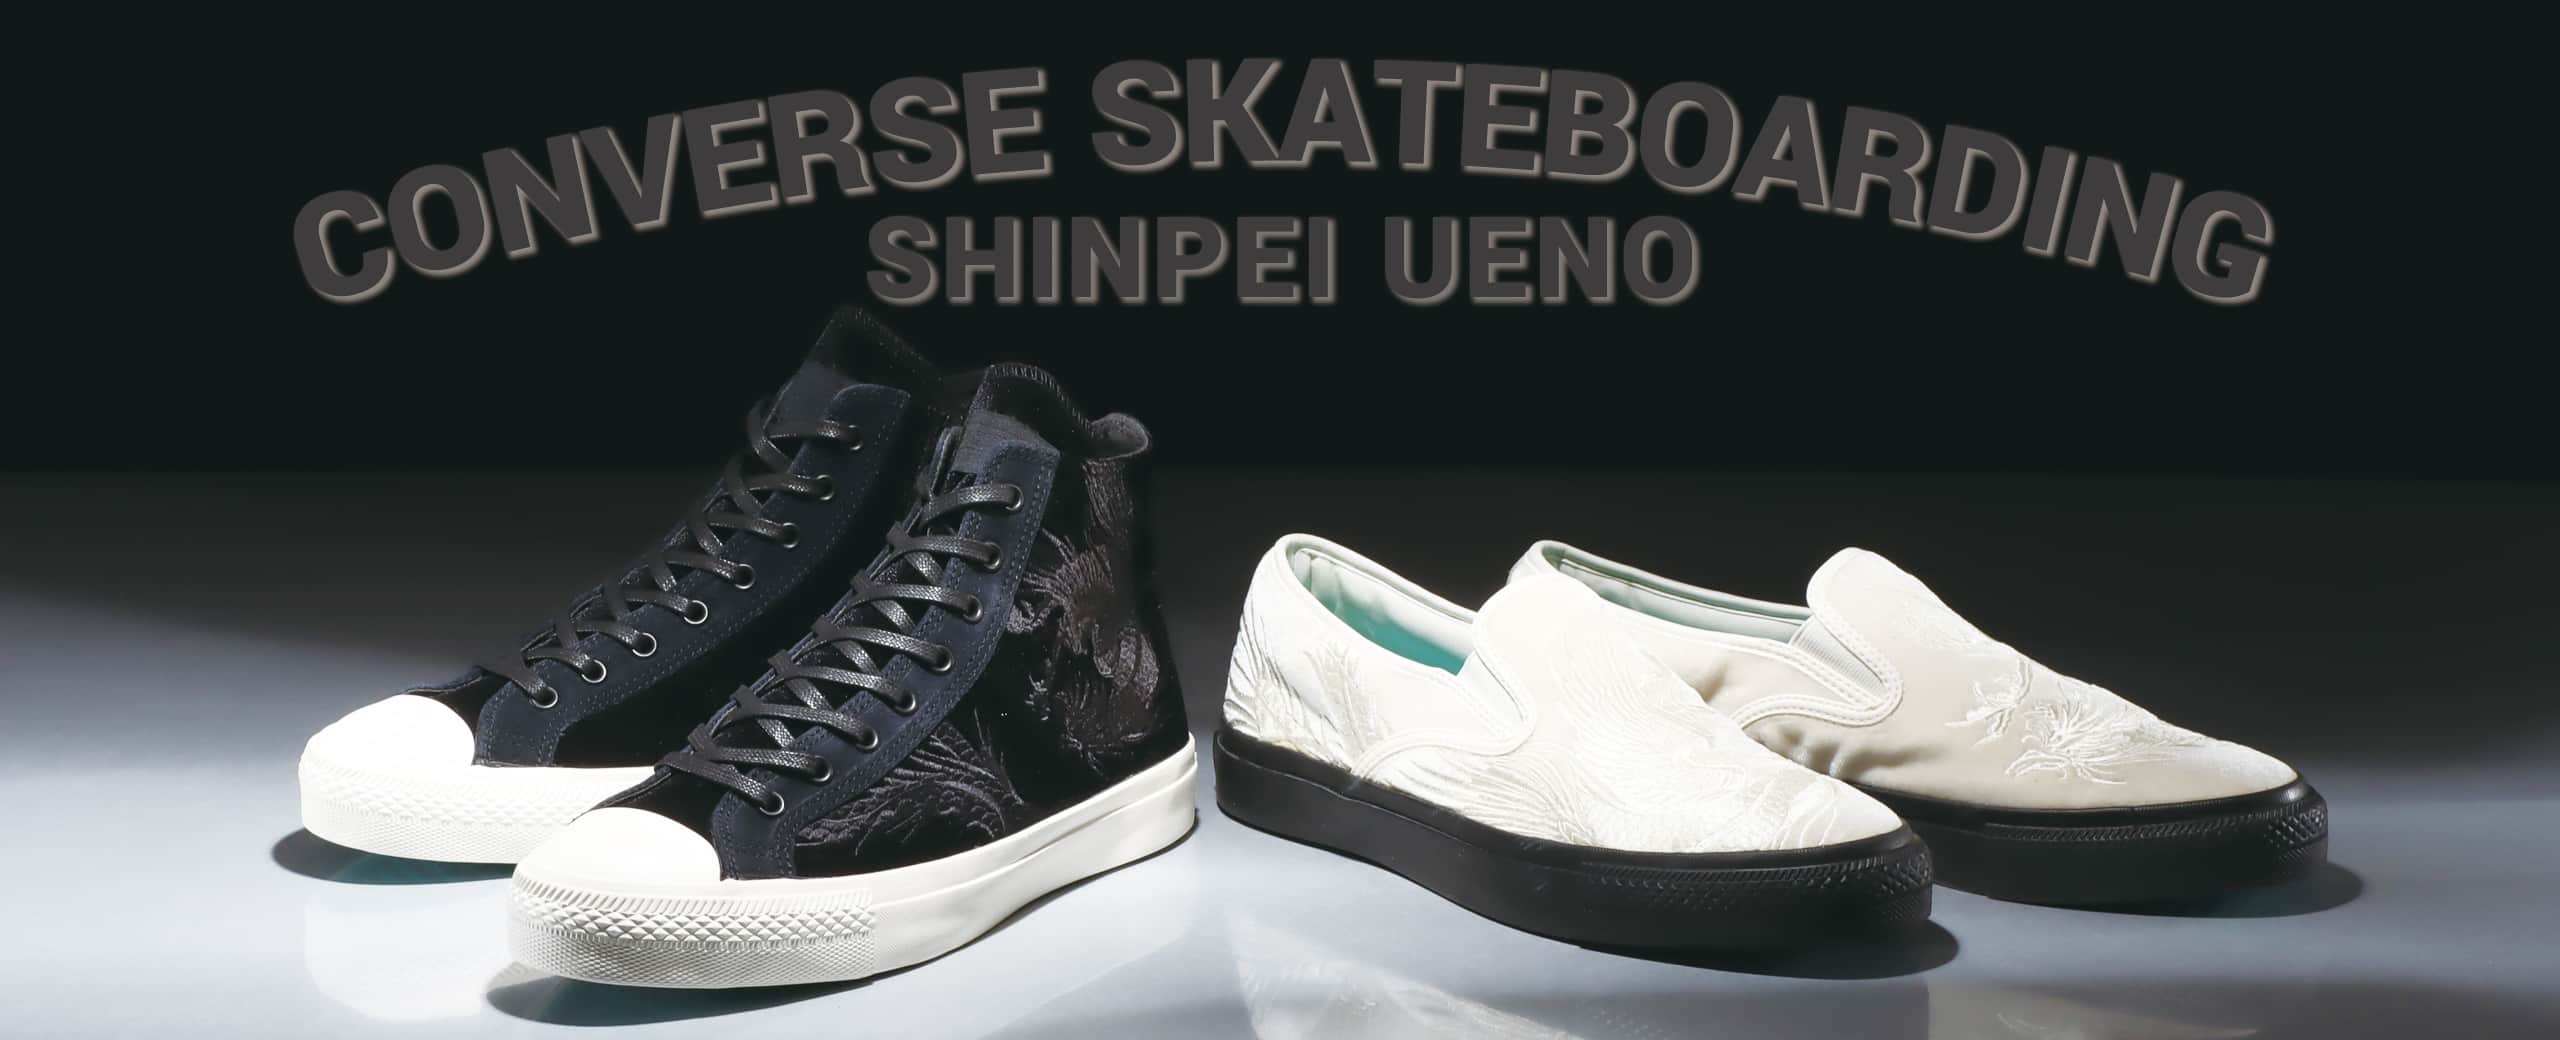 CONVERSE SKATEBORDING SHINPEI UENO